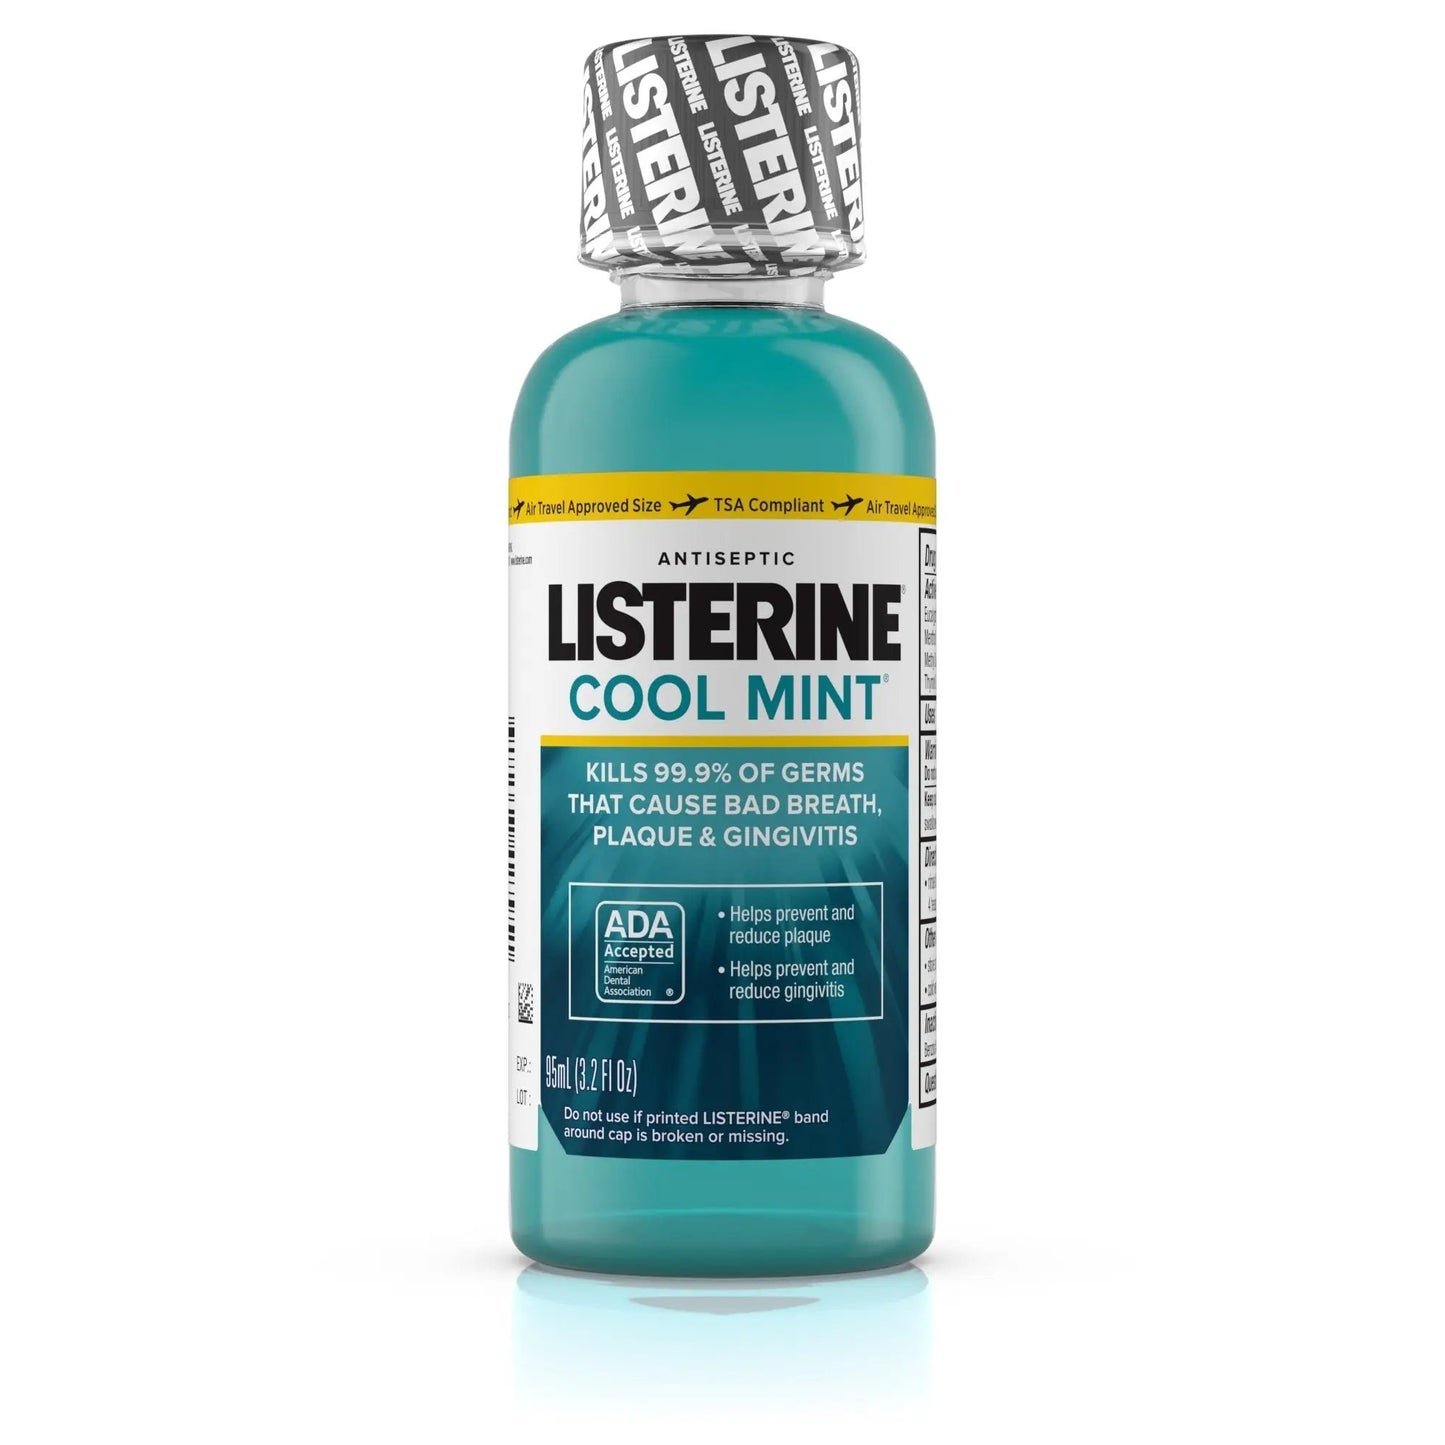 Listerine Cool Mint Antiseptic Mouthwash, 3.2 oz. Bottle